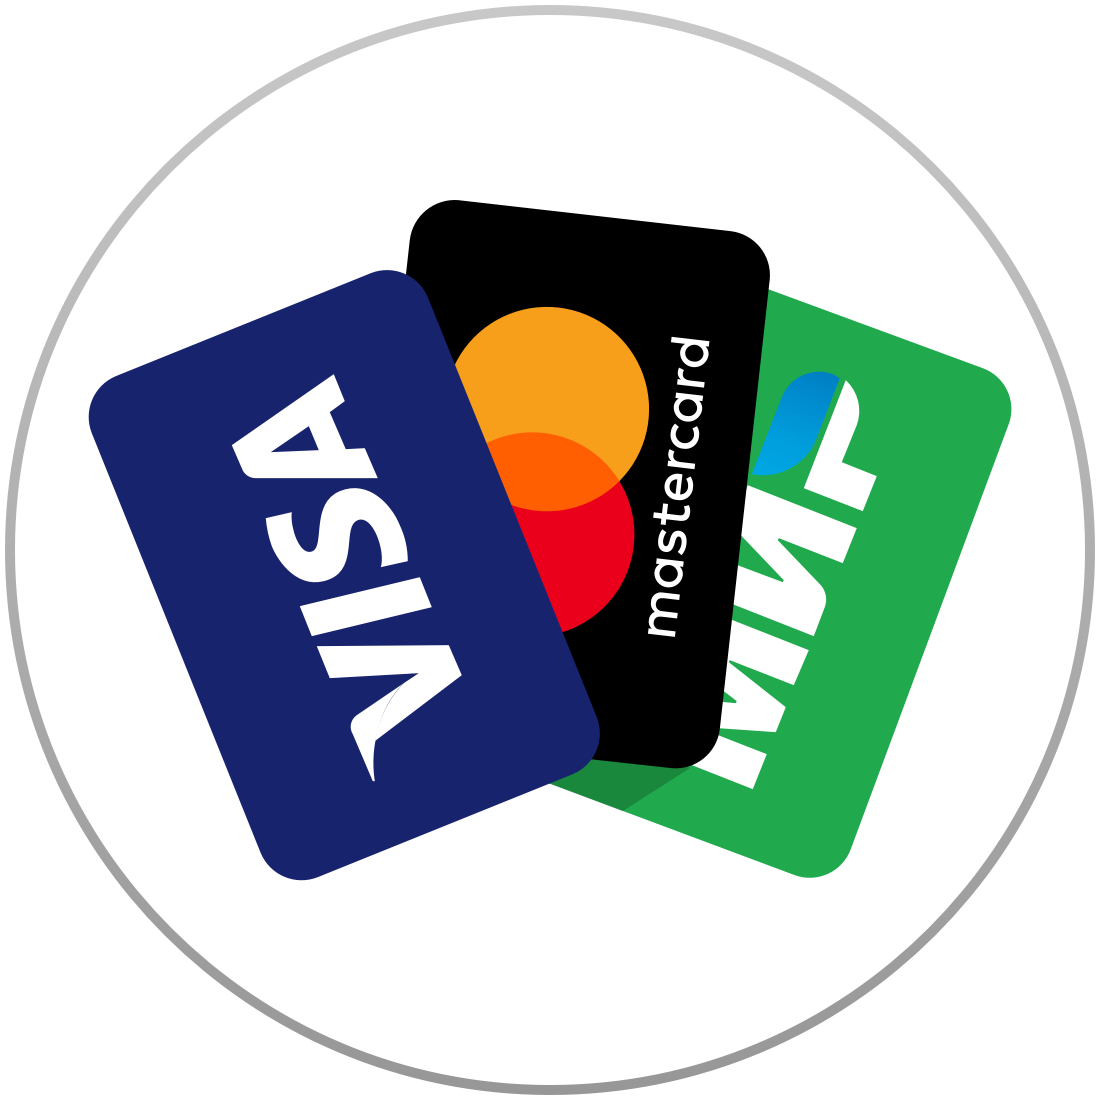 Логотип виза Мастеркард мир. Оплата картой. Значок оплата картой. Платежные системы.